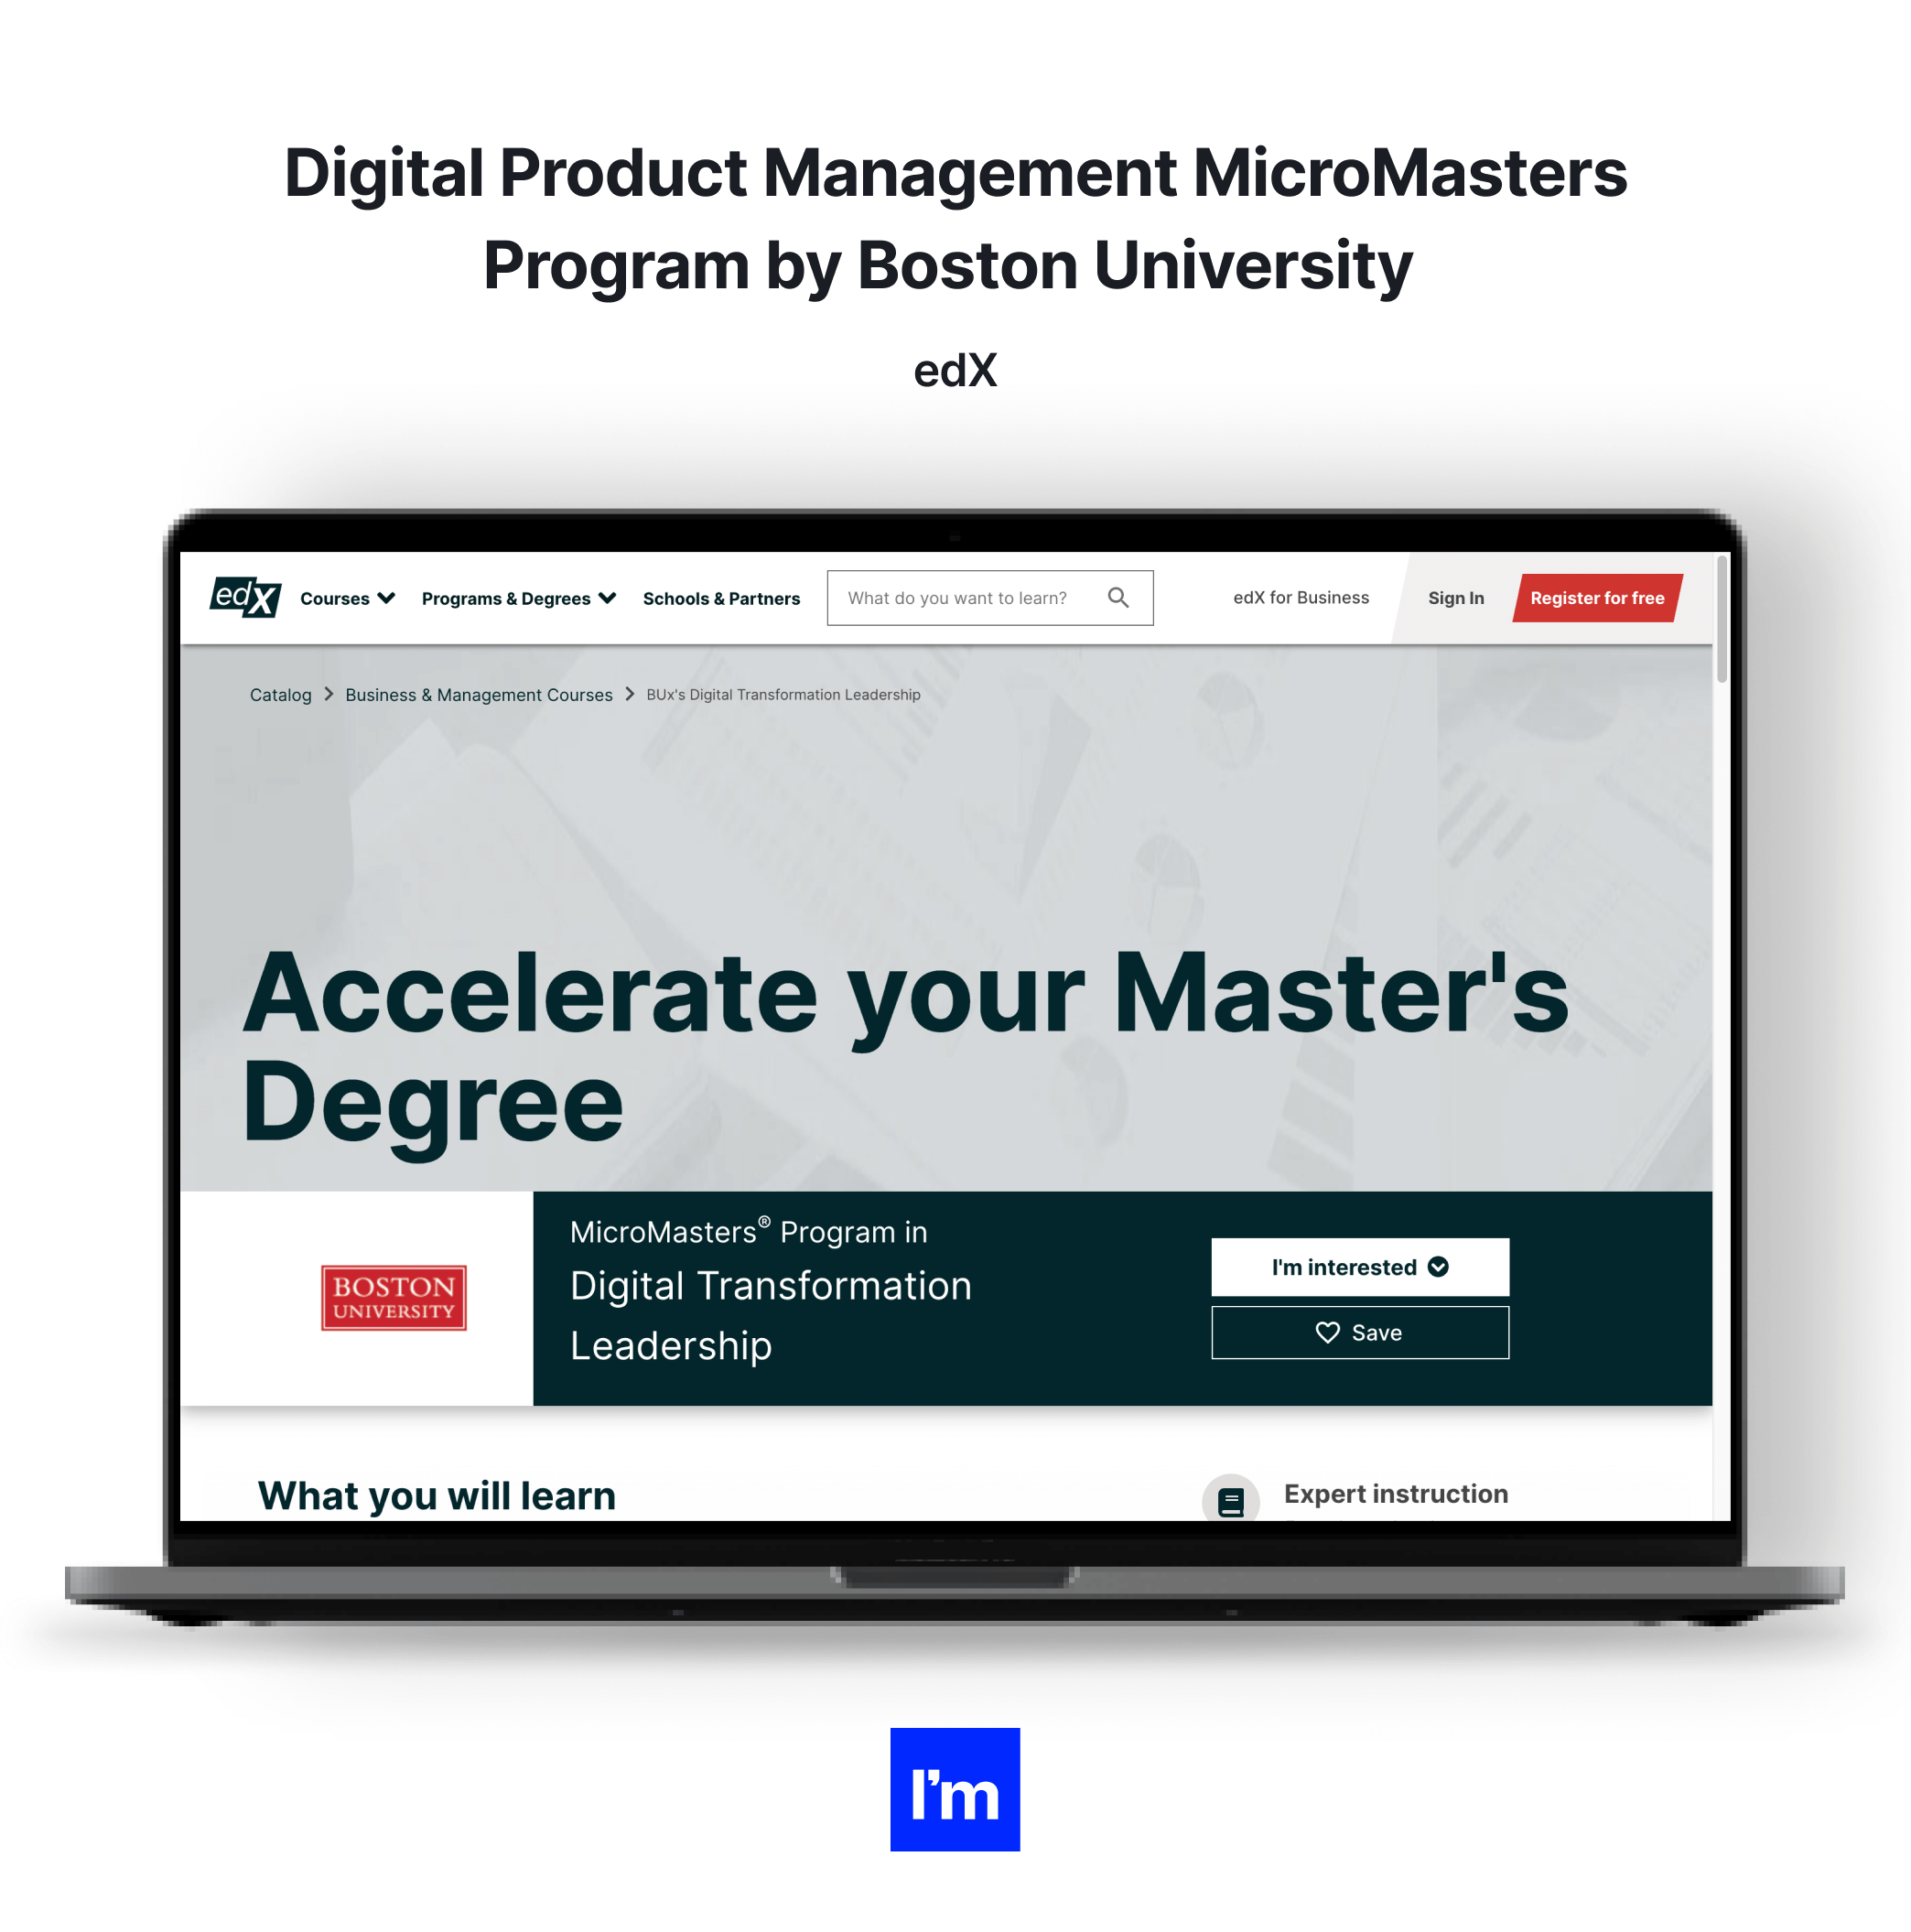 Top 10 Product Management Certification Programs - Digital Product Management MicroMasters Program by Boston University